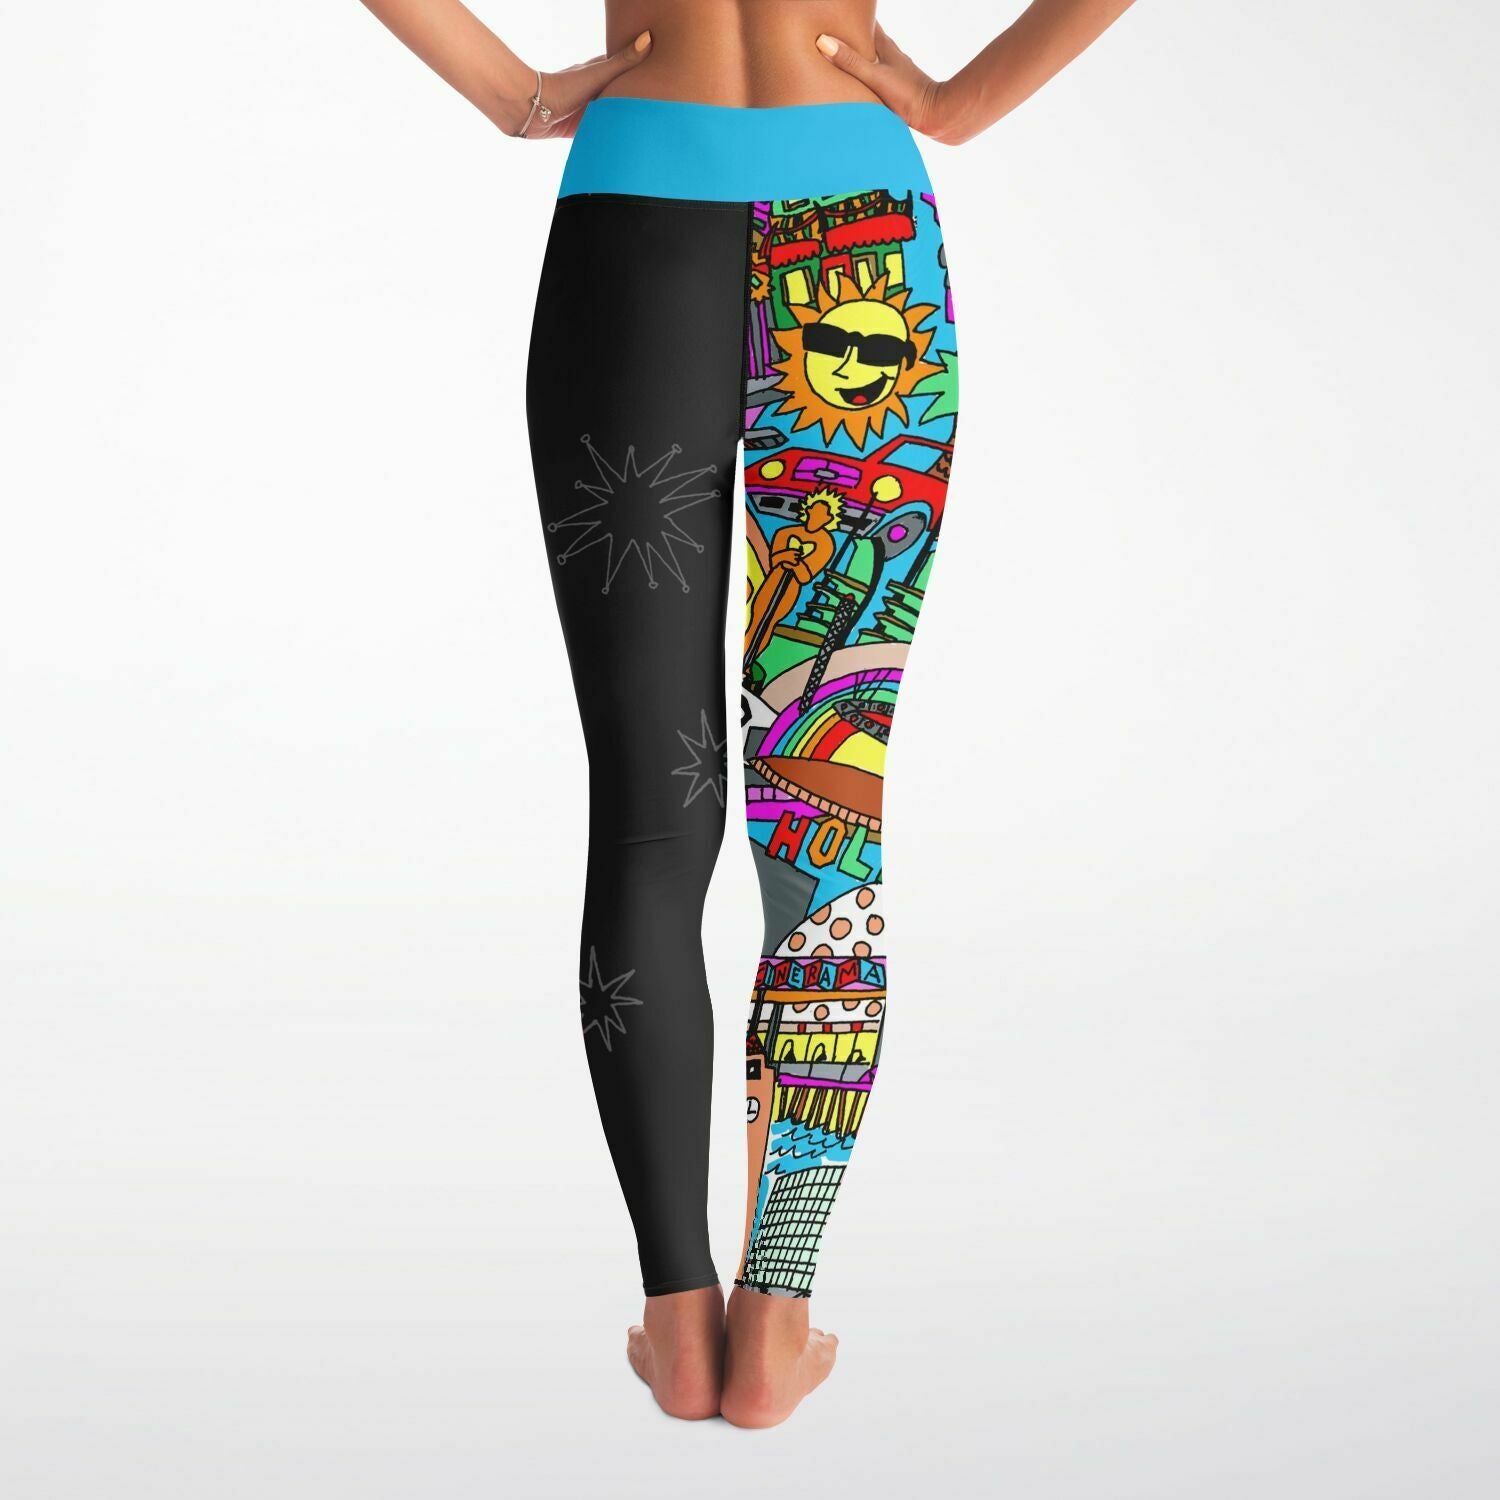  Mvirnsw Women's Crazy Colors Yoga Pants High Waisted